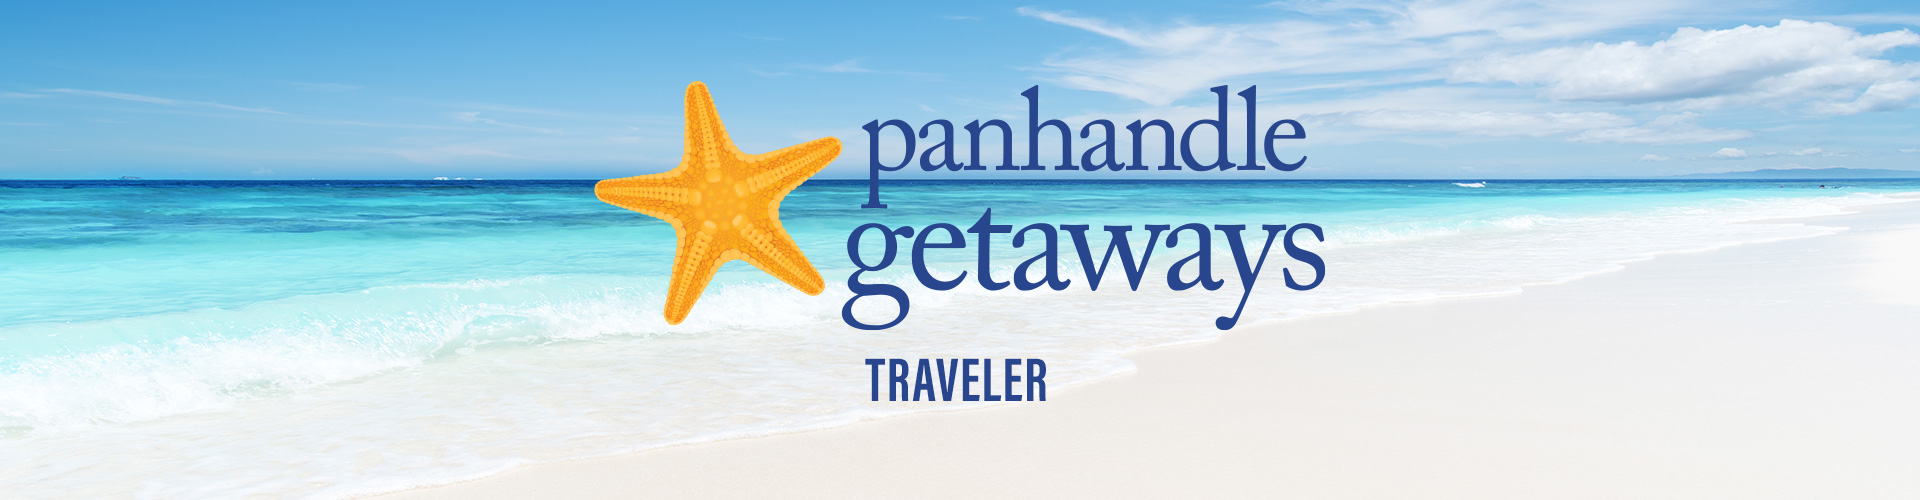 Panhandle Getaways 30A Traveler Banner